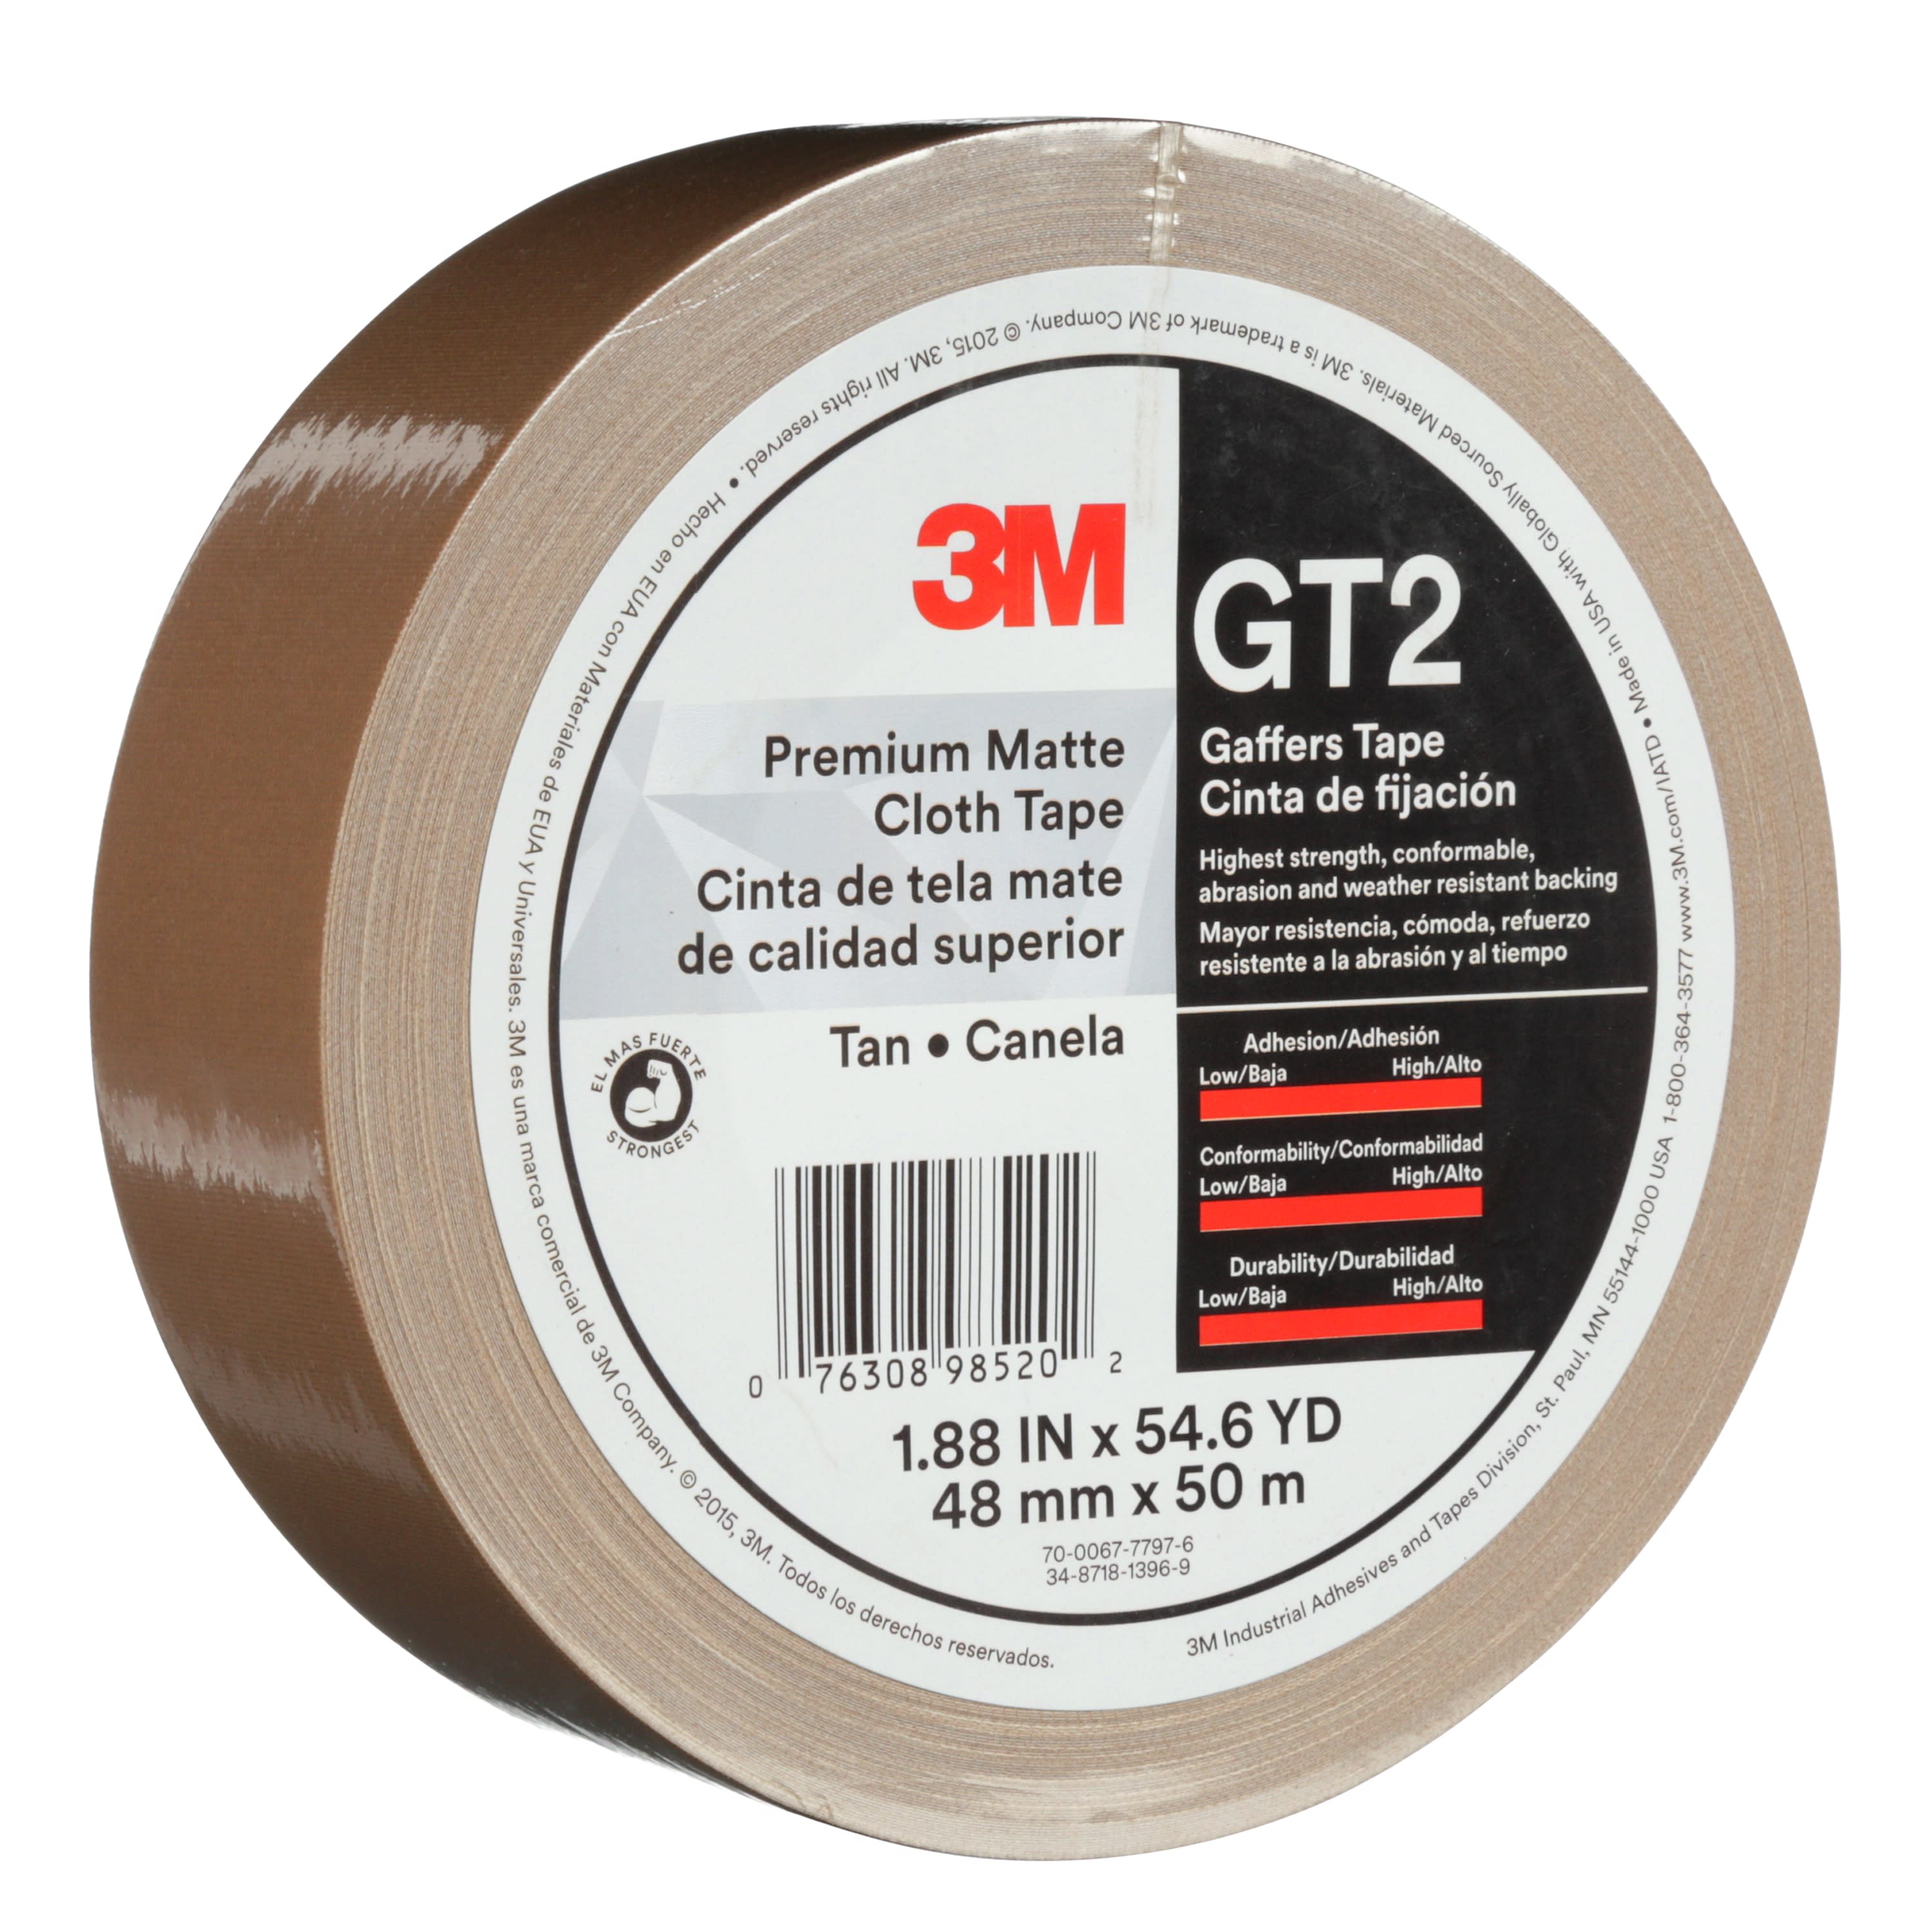 3M™ Premium Matte Cloth (Gaffers) Tape GT2, Tan, 48 mm x 50 m, 11 mil,
24 per case